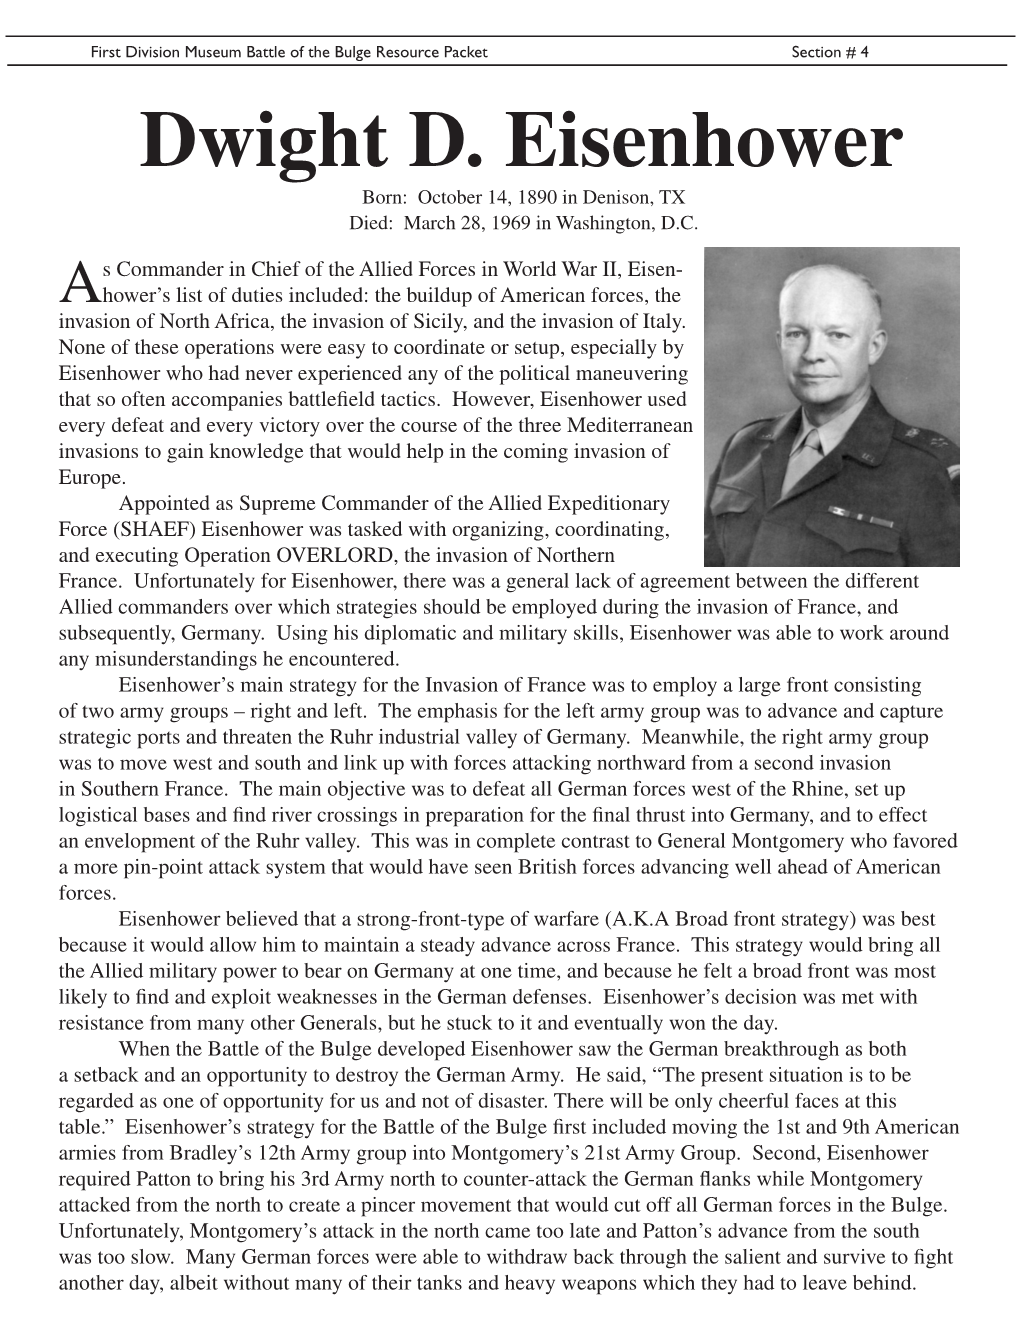 Dwight D. Eisenhower Born: October 14, 1890 in Denison, TX Died: March 28, 1969 in Washington, D.C